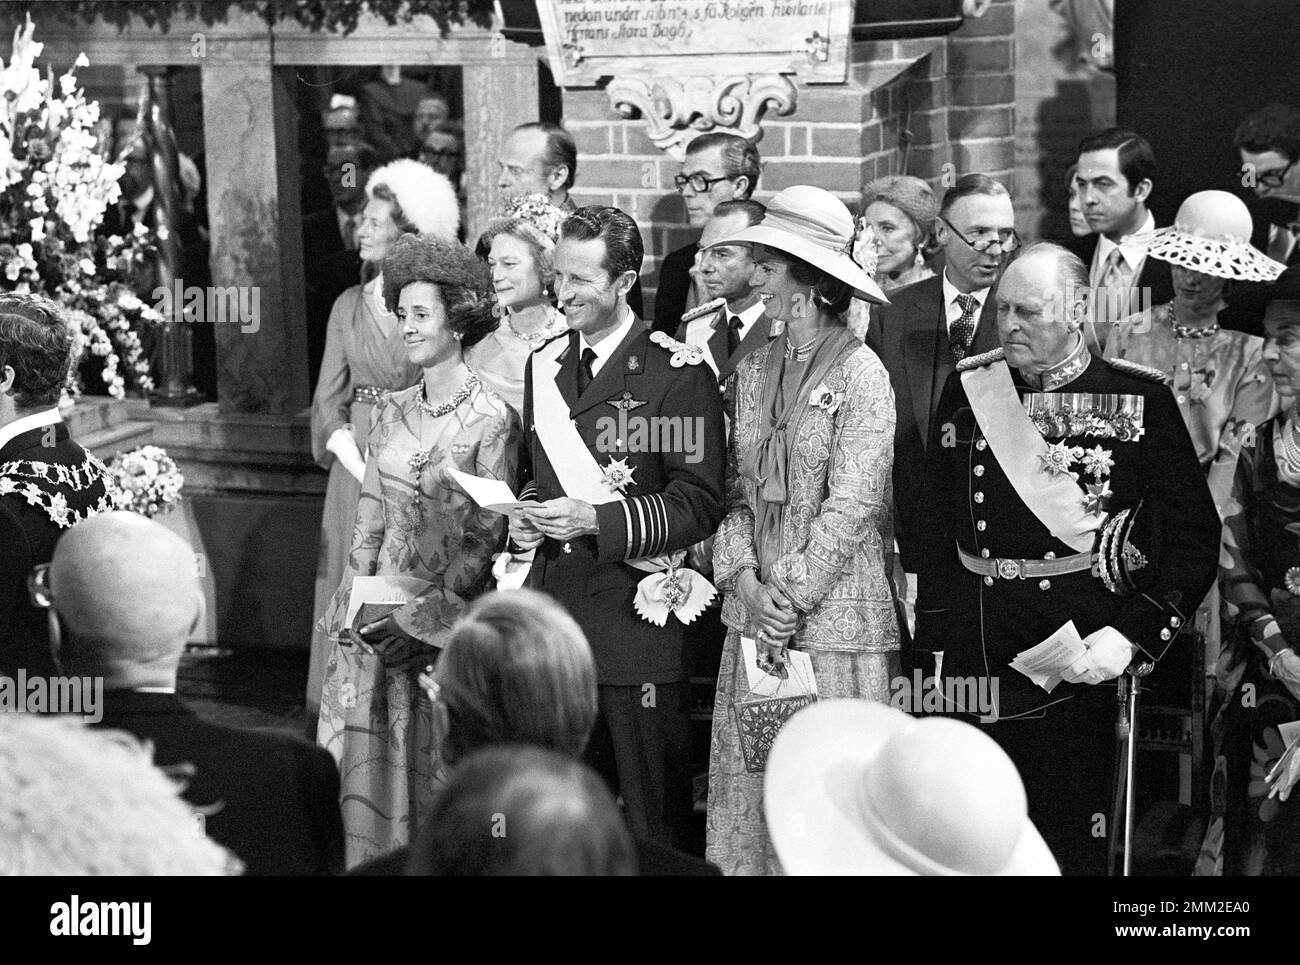 Wedding of Carl XVI Gustaf and Silvia Sommerlath. Carl XVI Gustaf, King of Sweden. Born 30 april 1946. The wedding 19 june 1976 in Stockholm. Wedding guests King Baudouin of Belgium , Queen Fabiola of Belgium, King Olav V of Norwary, Queen Ingrid of Denmark, Stock Photo